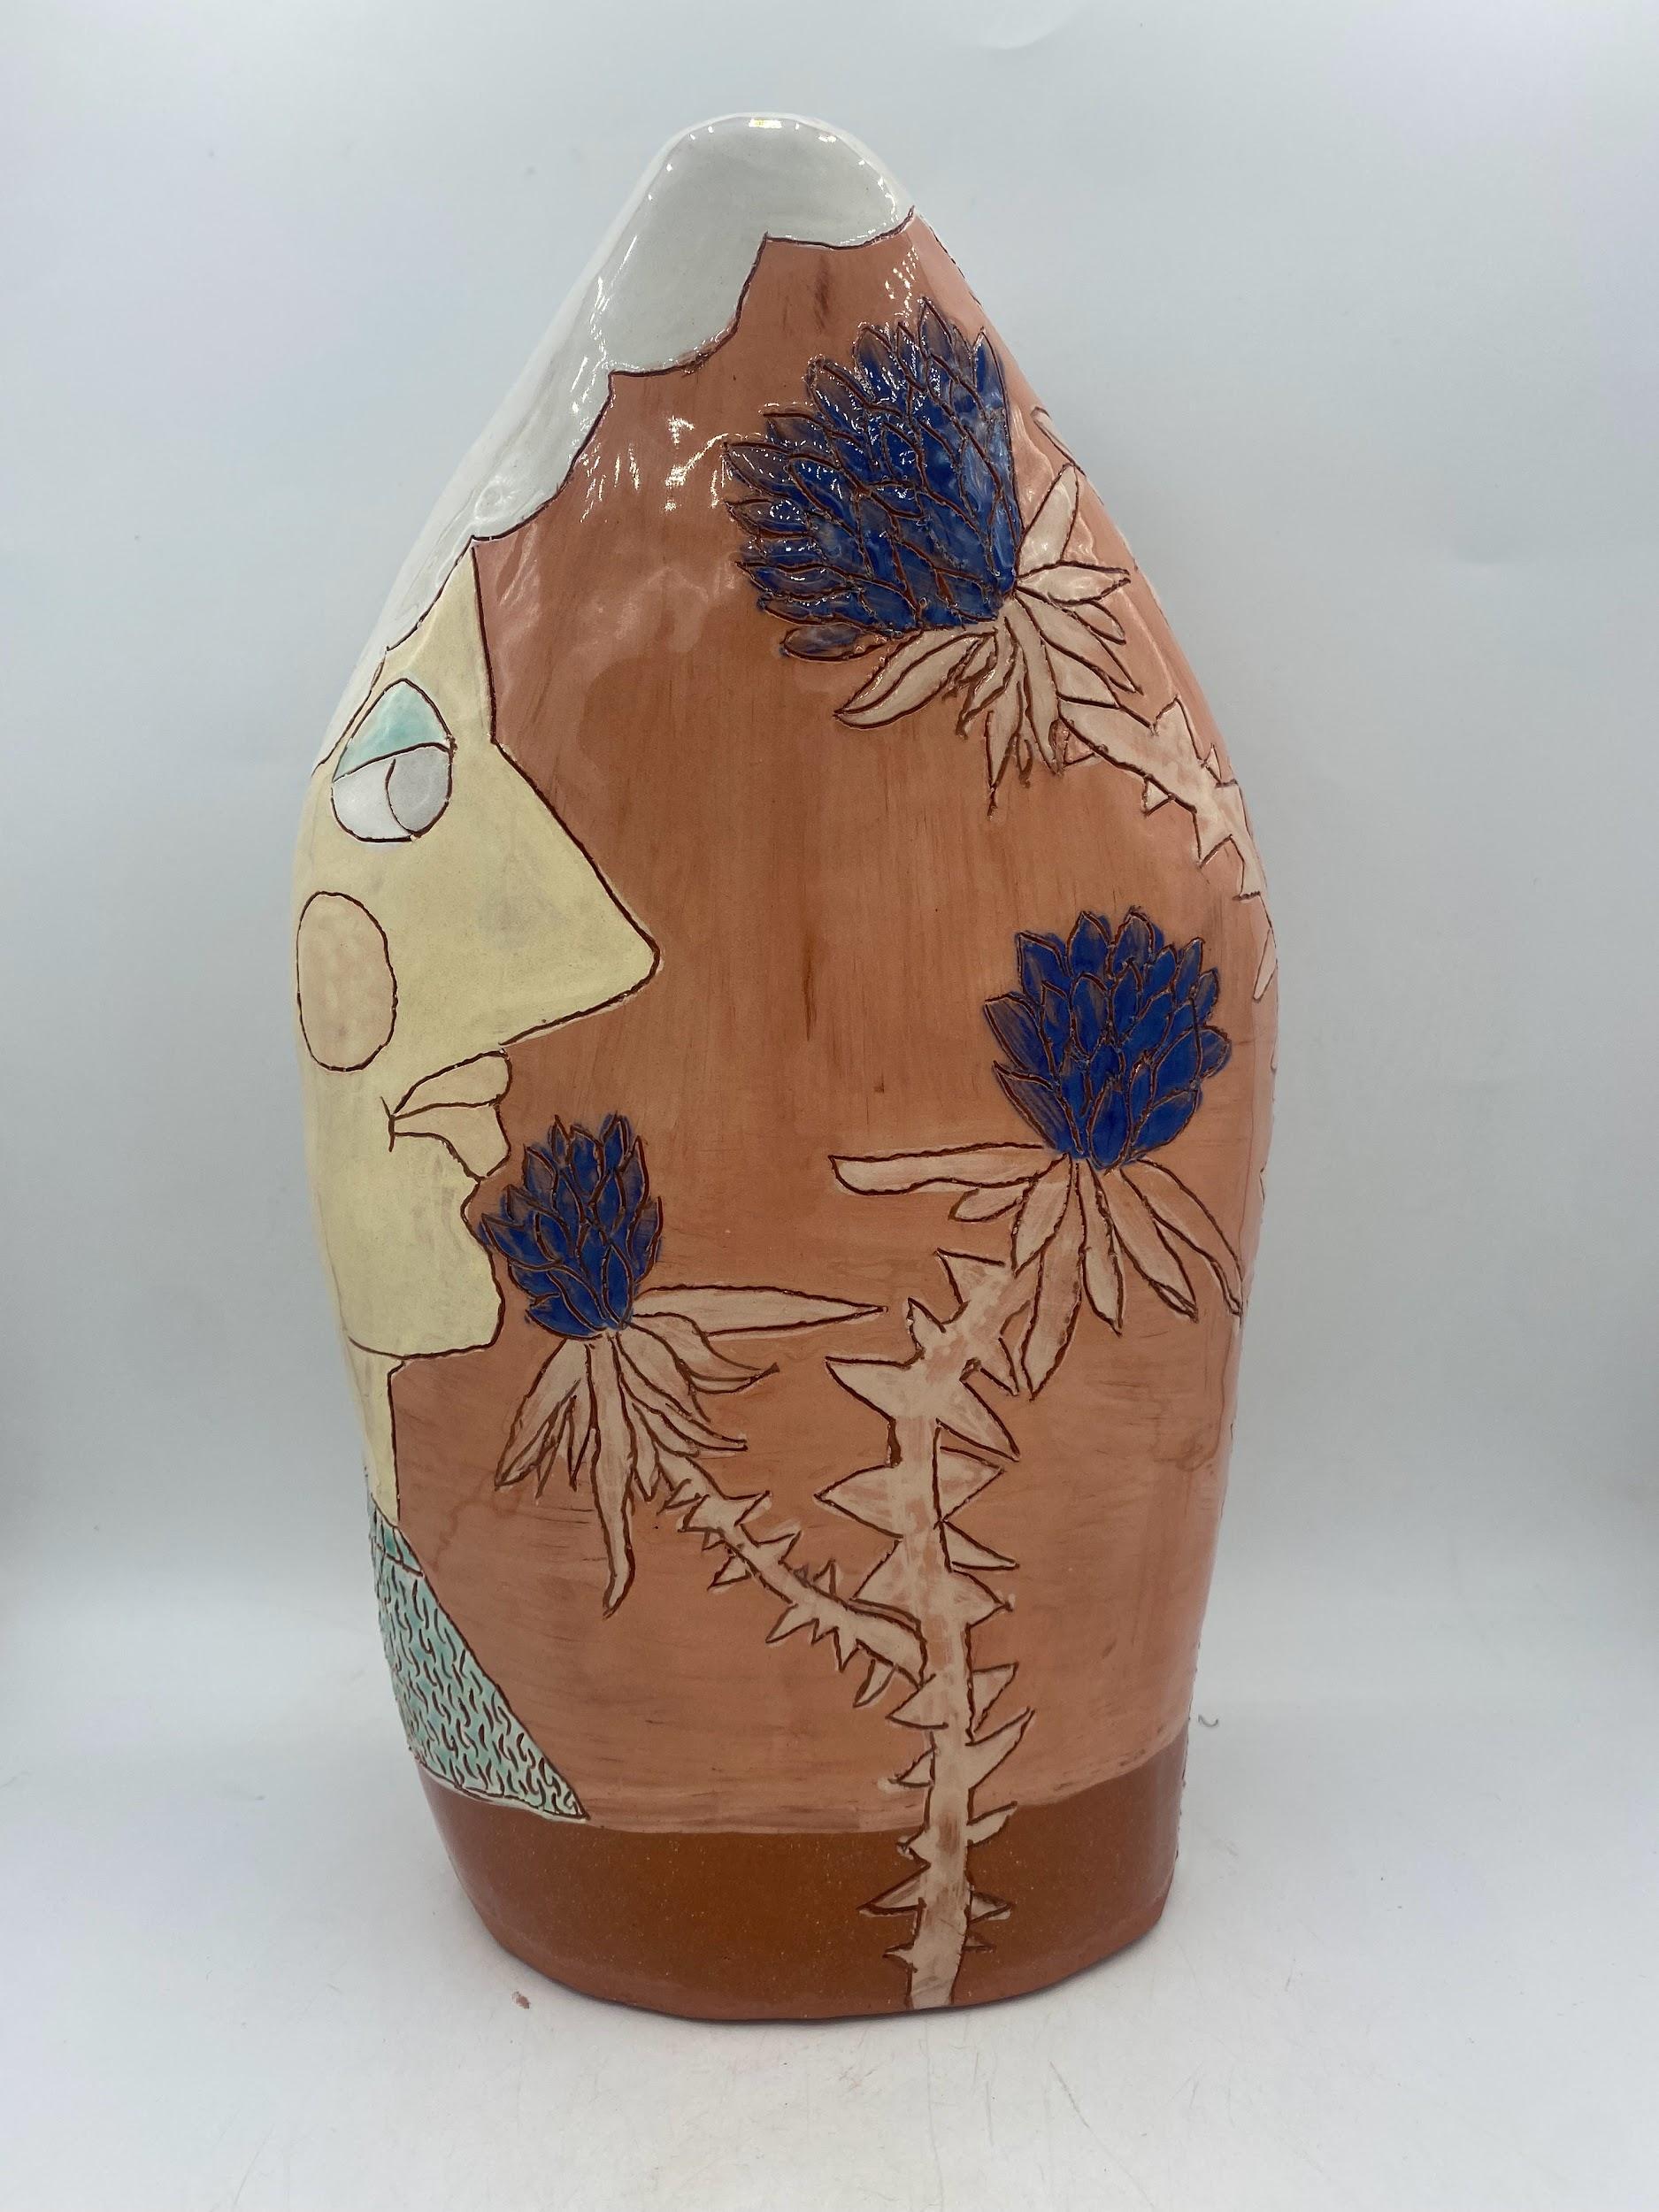 Lily Winslow's ceramic sculpture